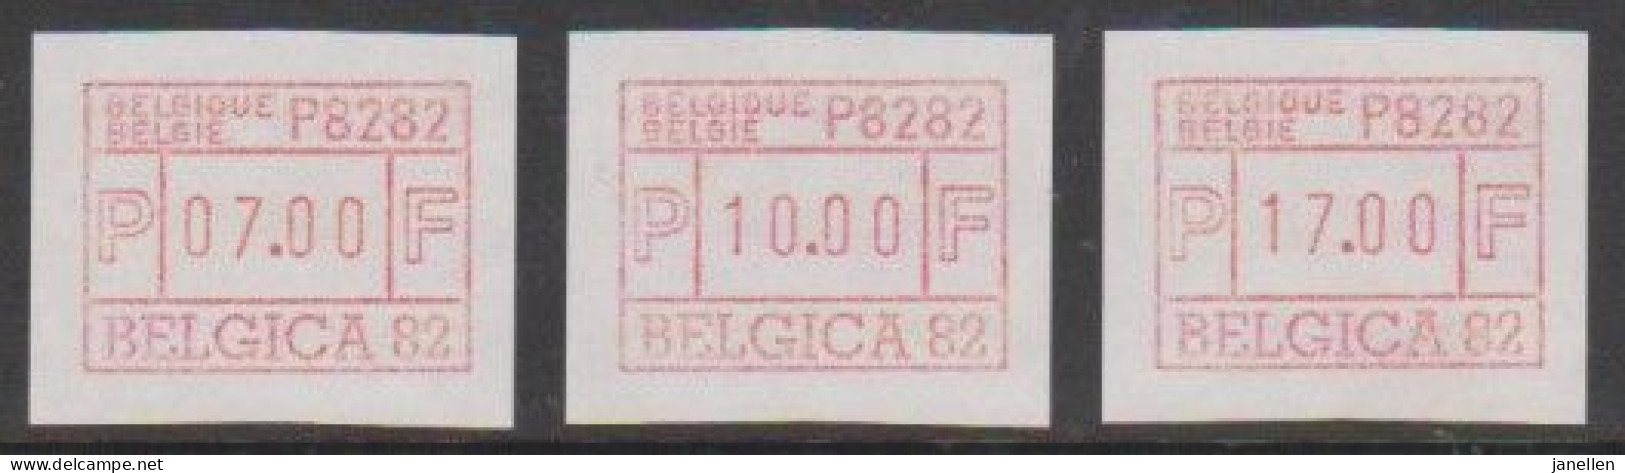 ATM 6A - Belgica 82 - Ungebraucht